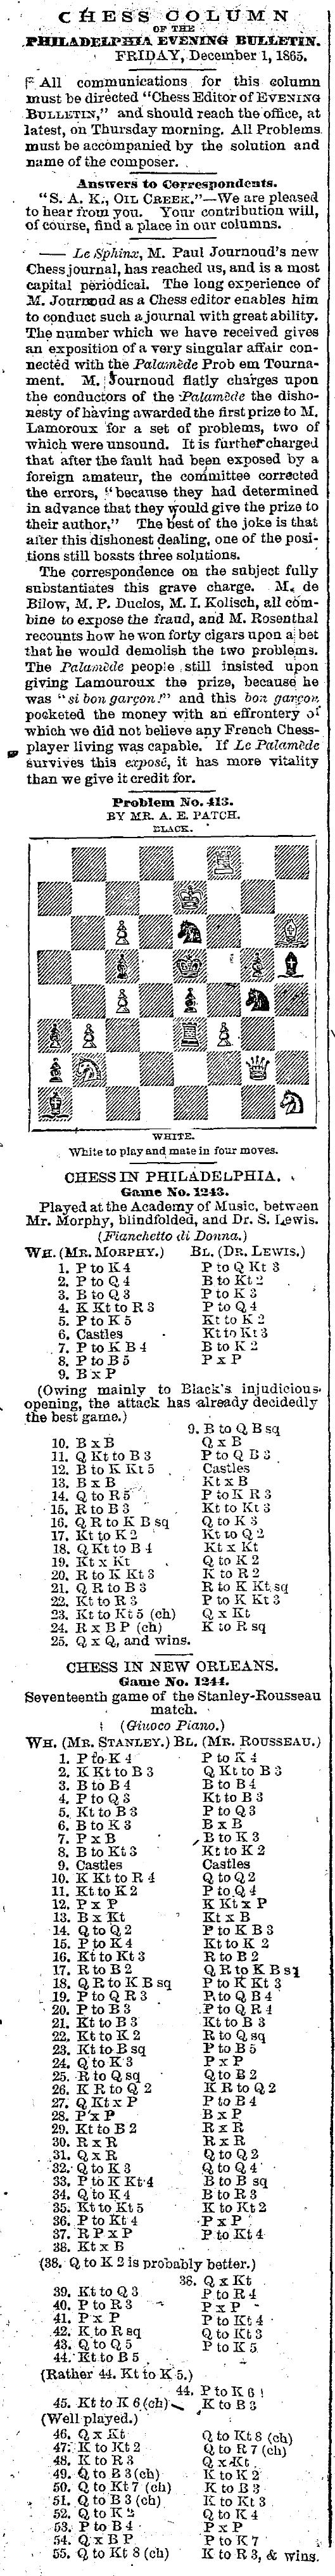 1865.12.01-01 Philadelphia Daily Evening Bulletin.jpg